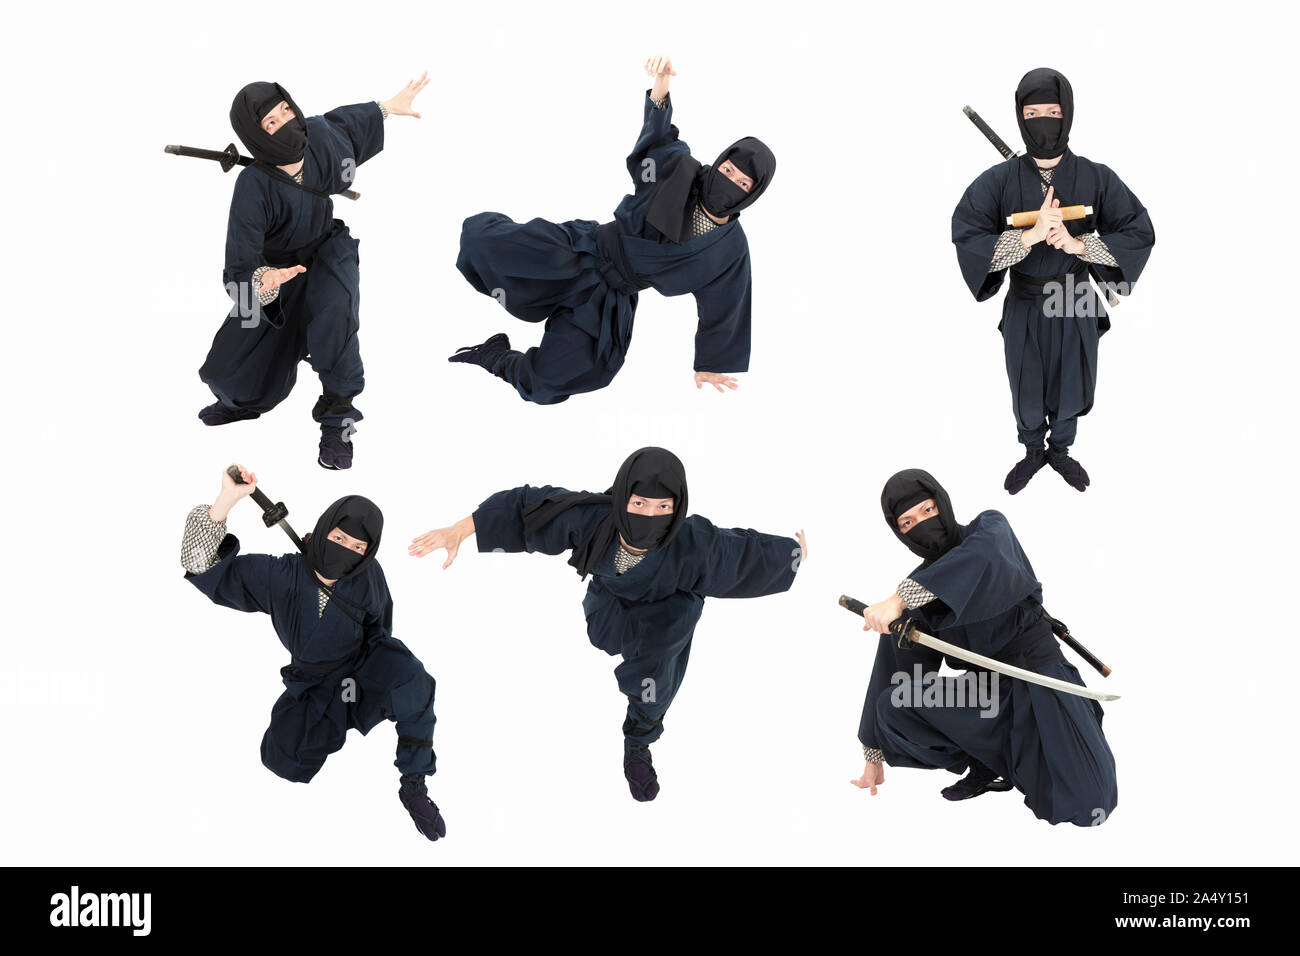 Ninja Poses Images  Free Download on Freepik